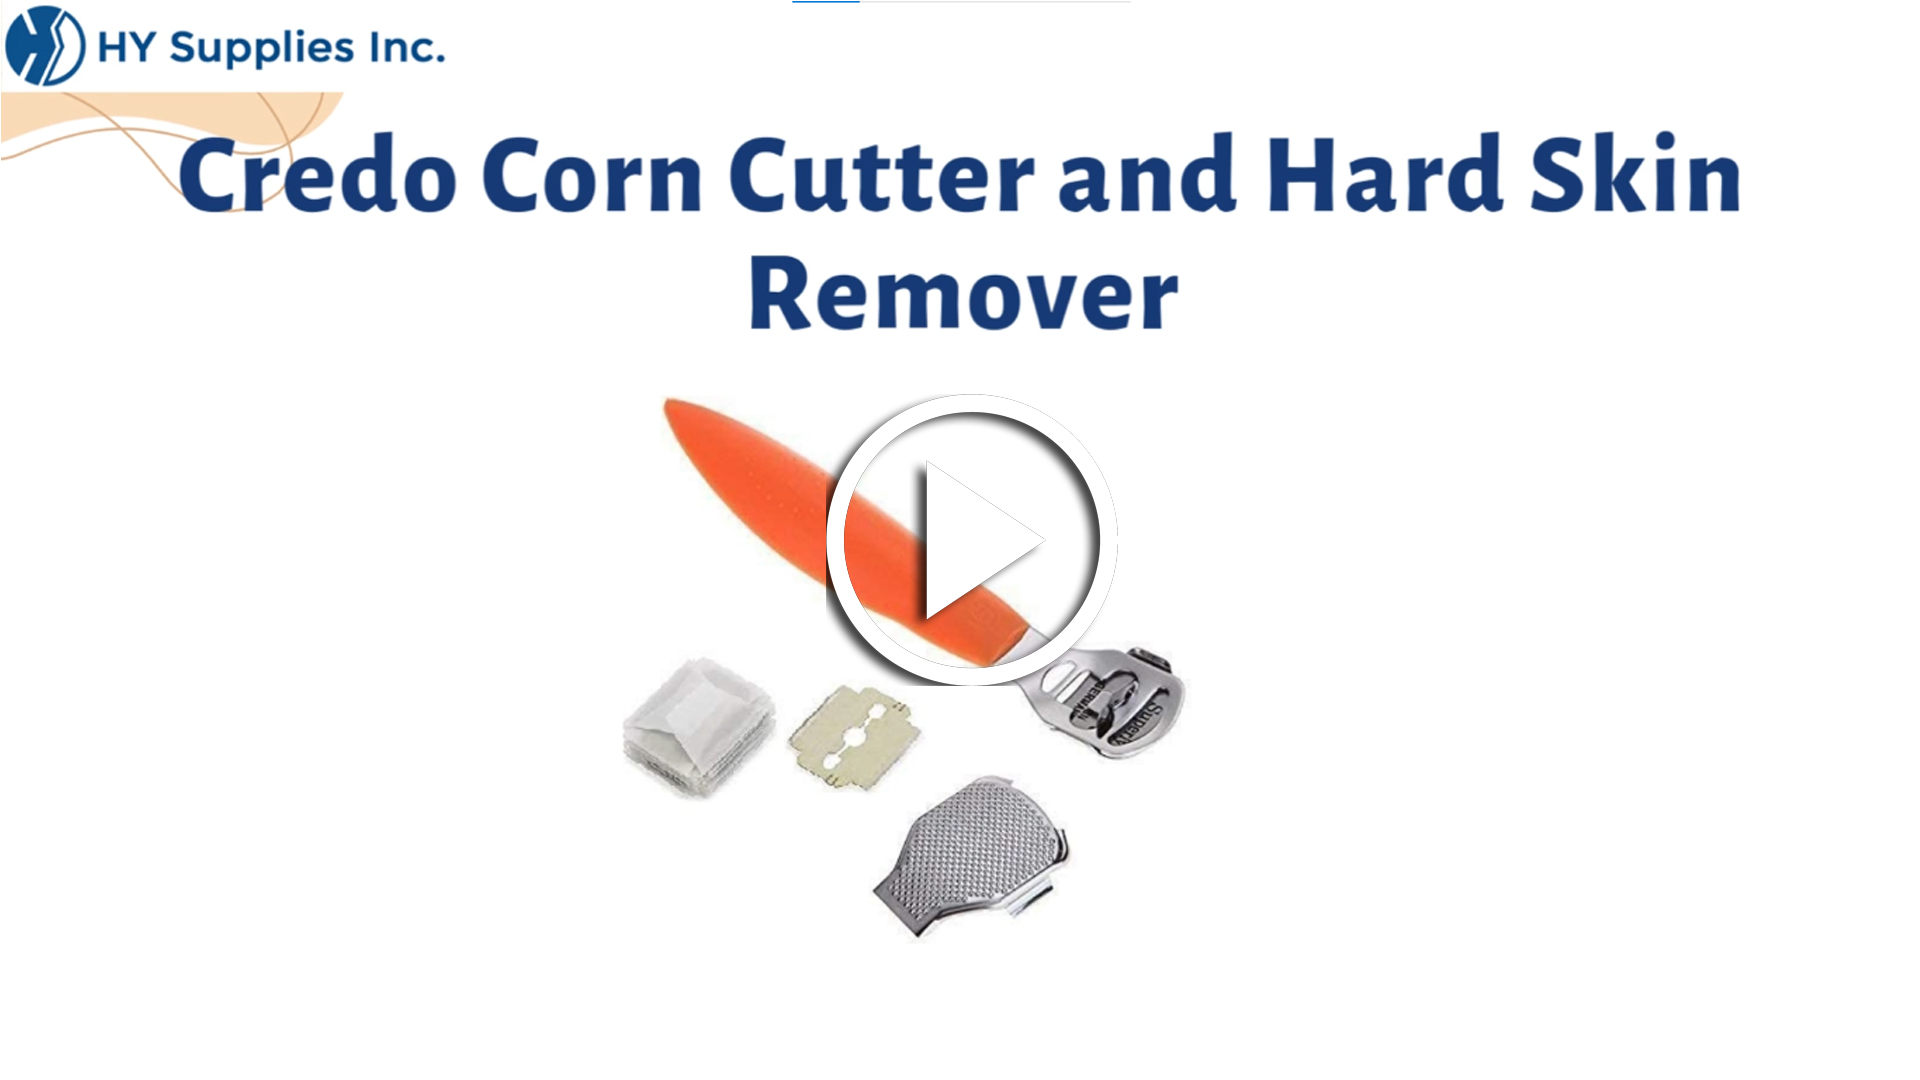 Credo Corn Cutter and Hard Skin Remover